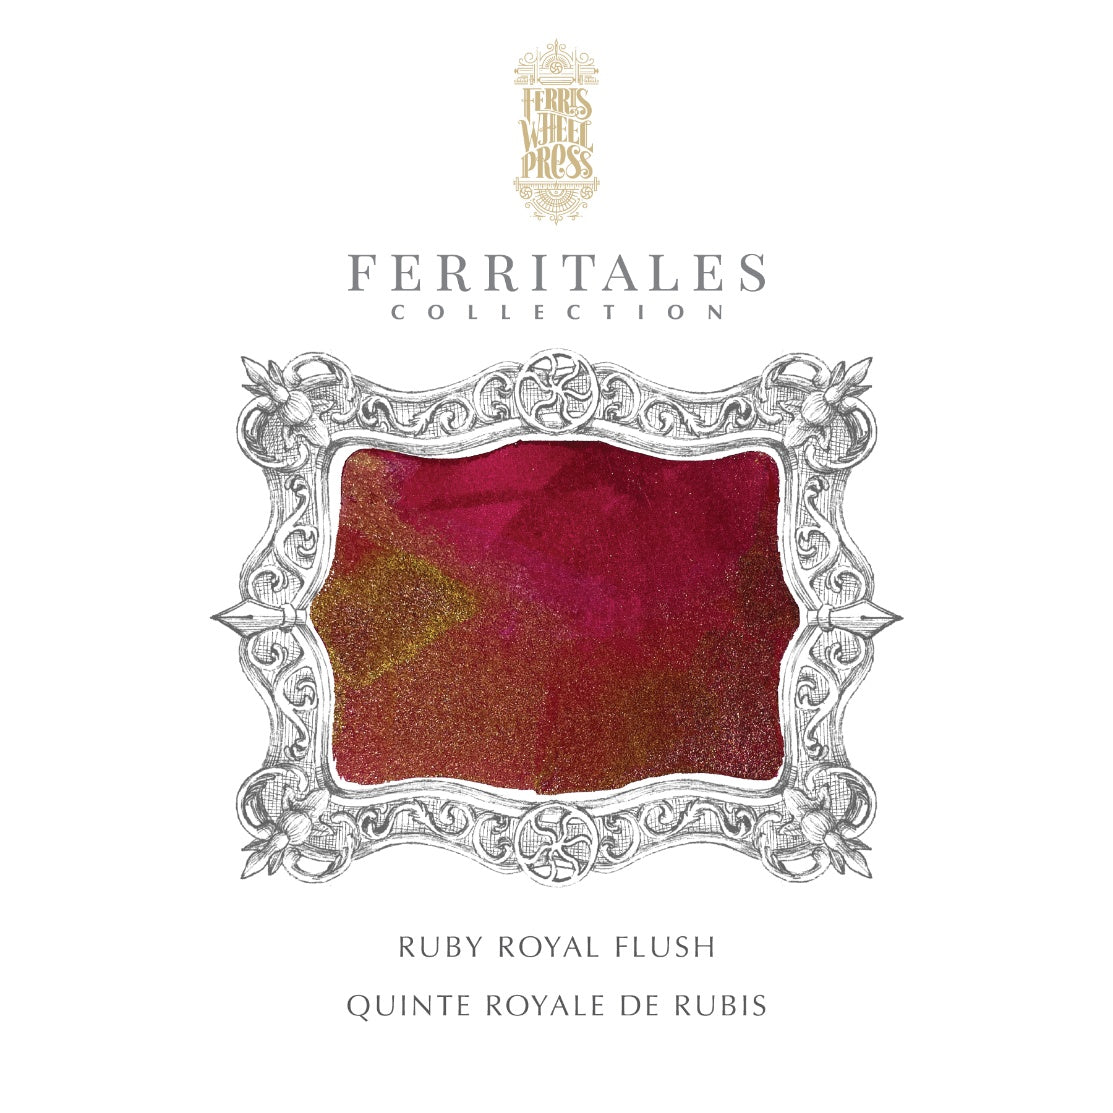 FERRIS WHEEL PRESS Fountain Pen Ink 20ml Ferritales Ruby Royal Flush Default Title